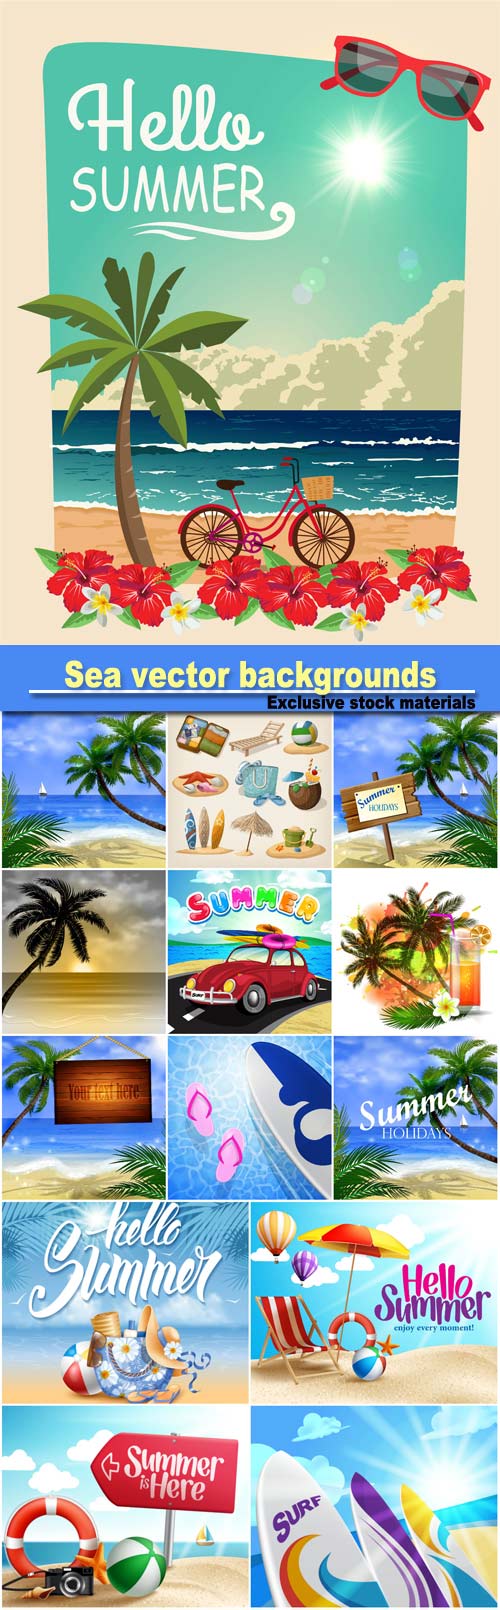 Hello summer, sea vector backgrounds